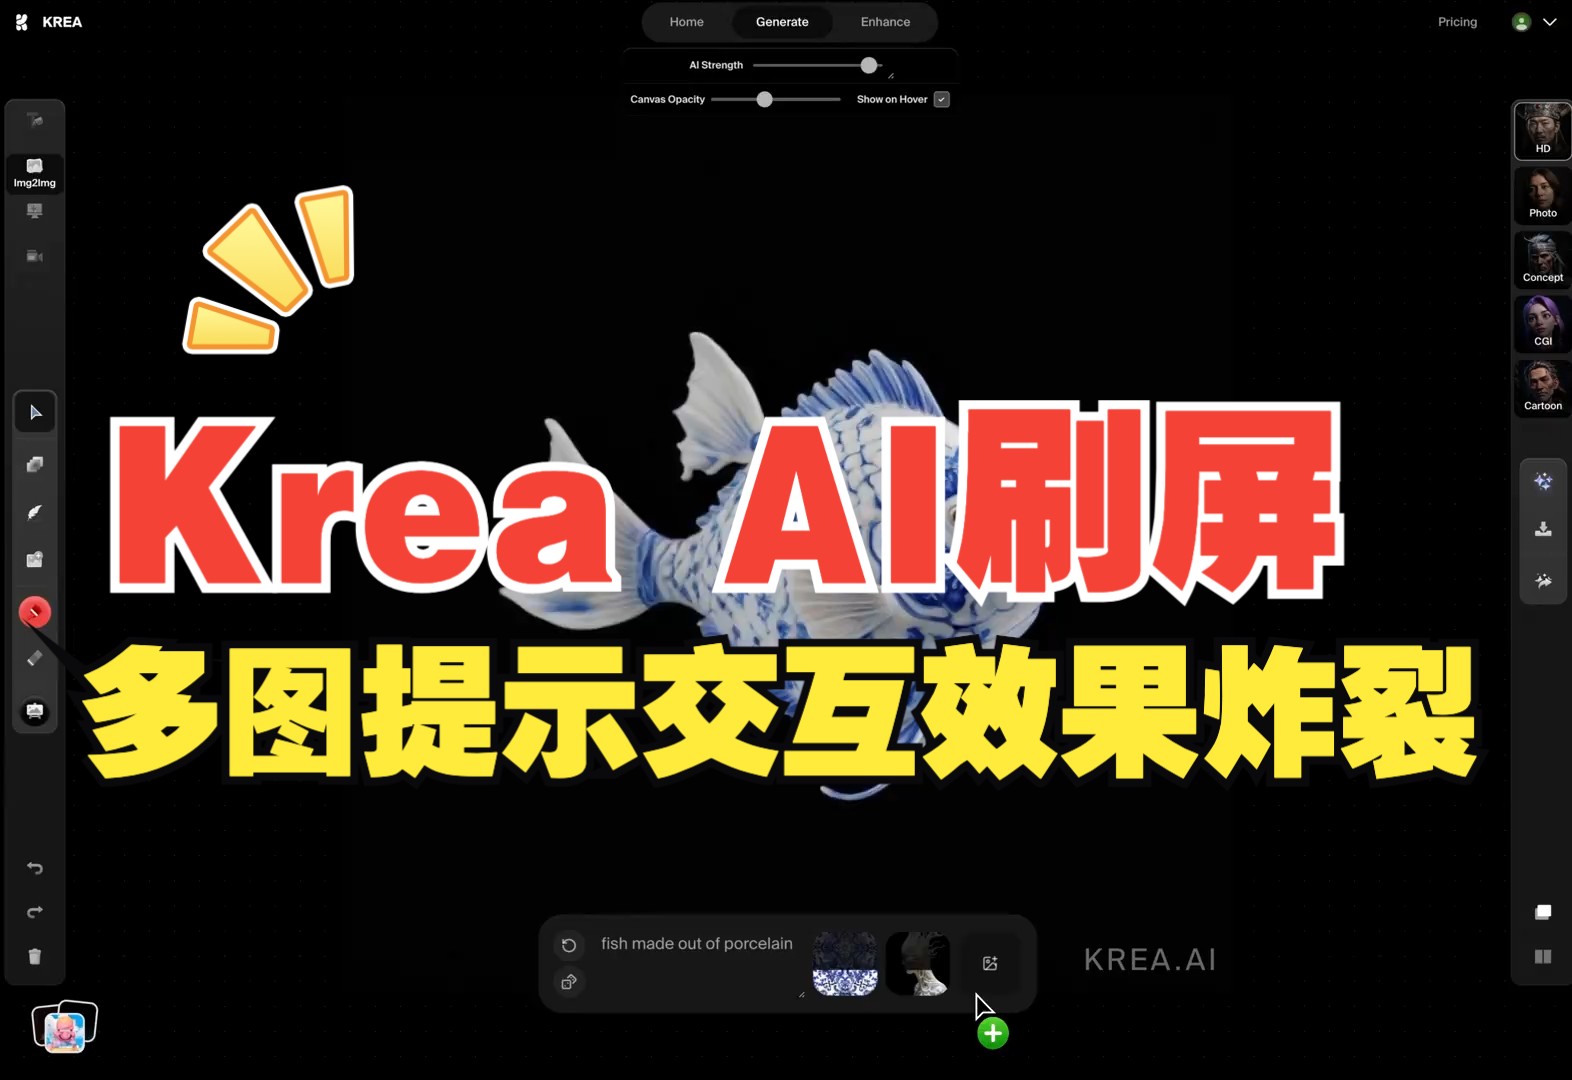 再次刷屏，Krea AI发布multi-image prompts【多图片提示】功能